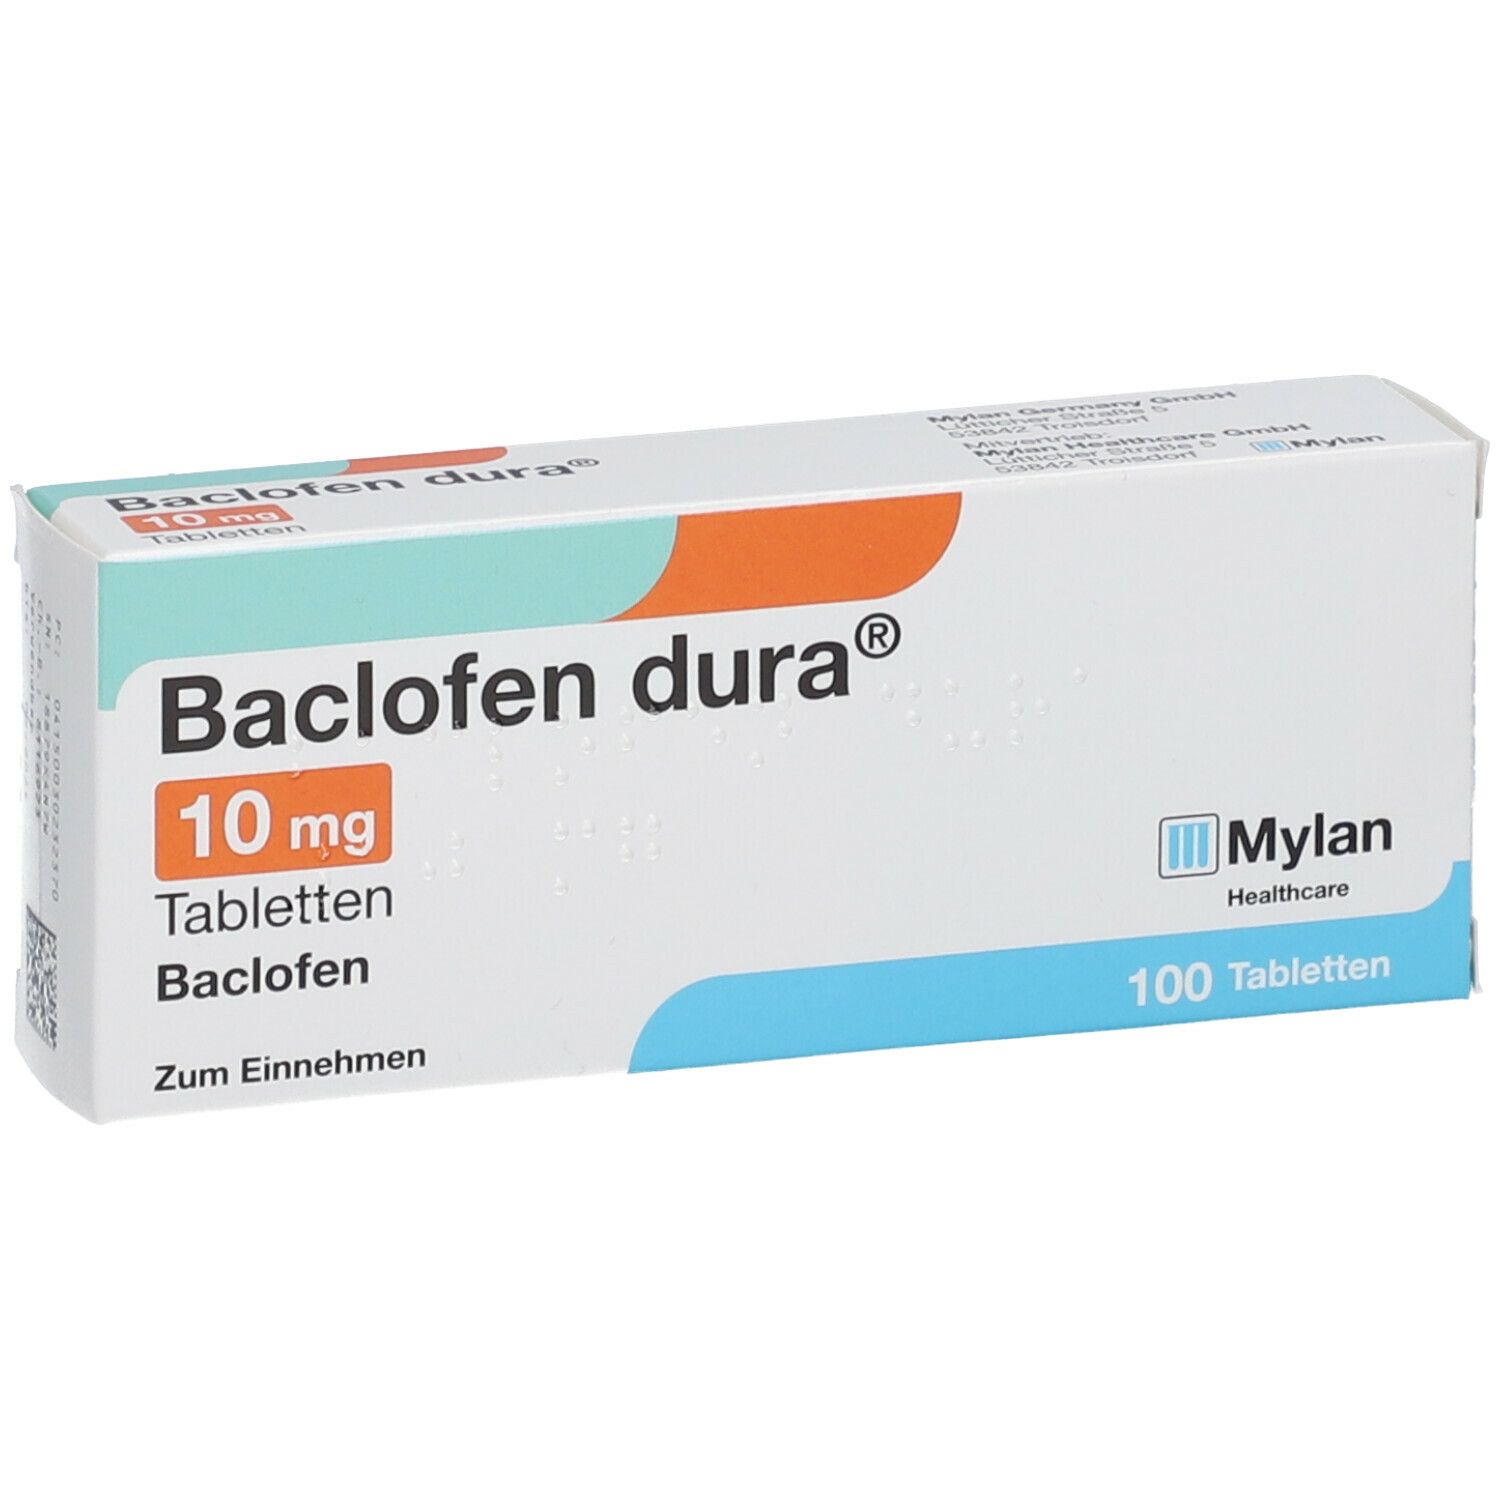 Baclofen dura® 10 mg